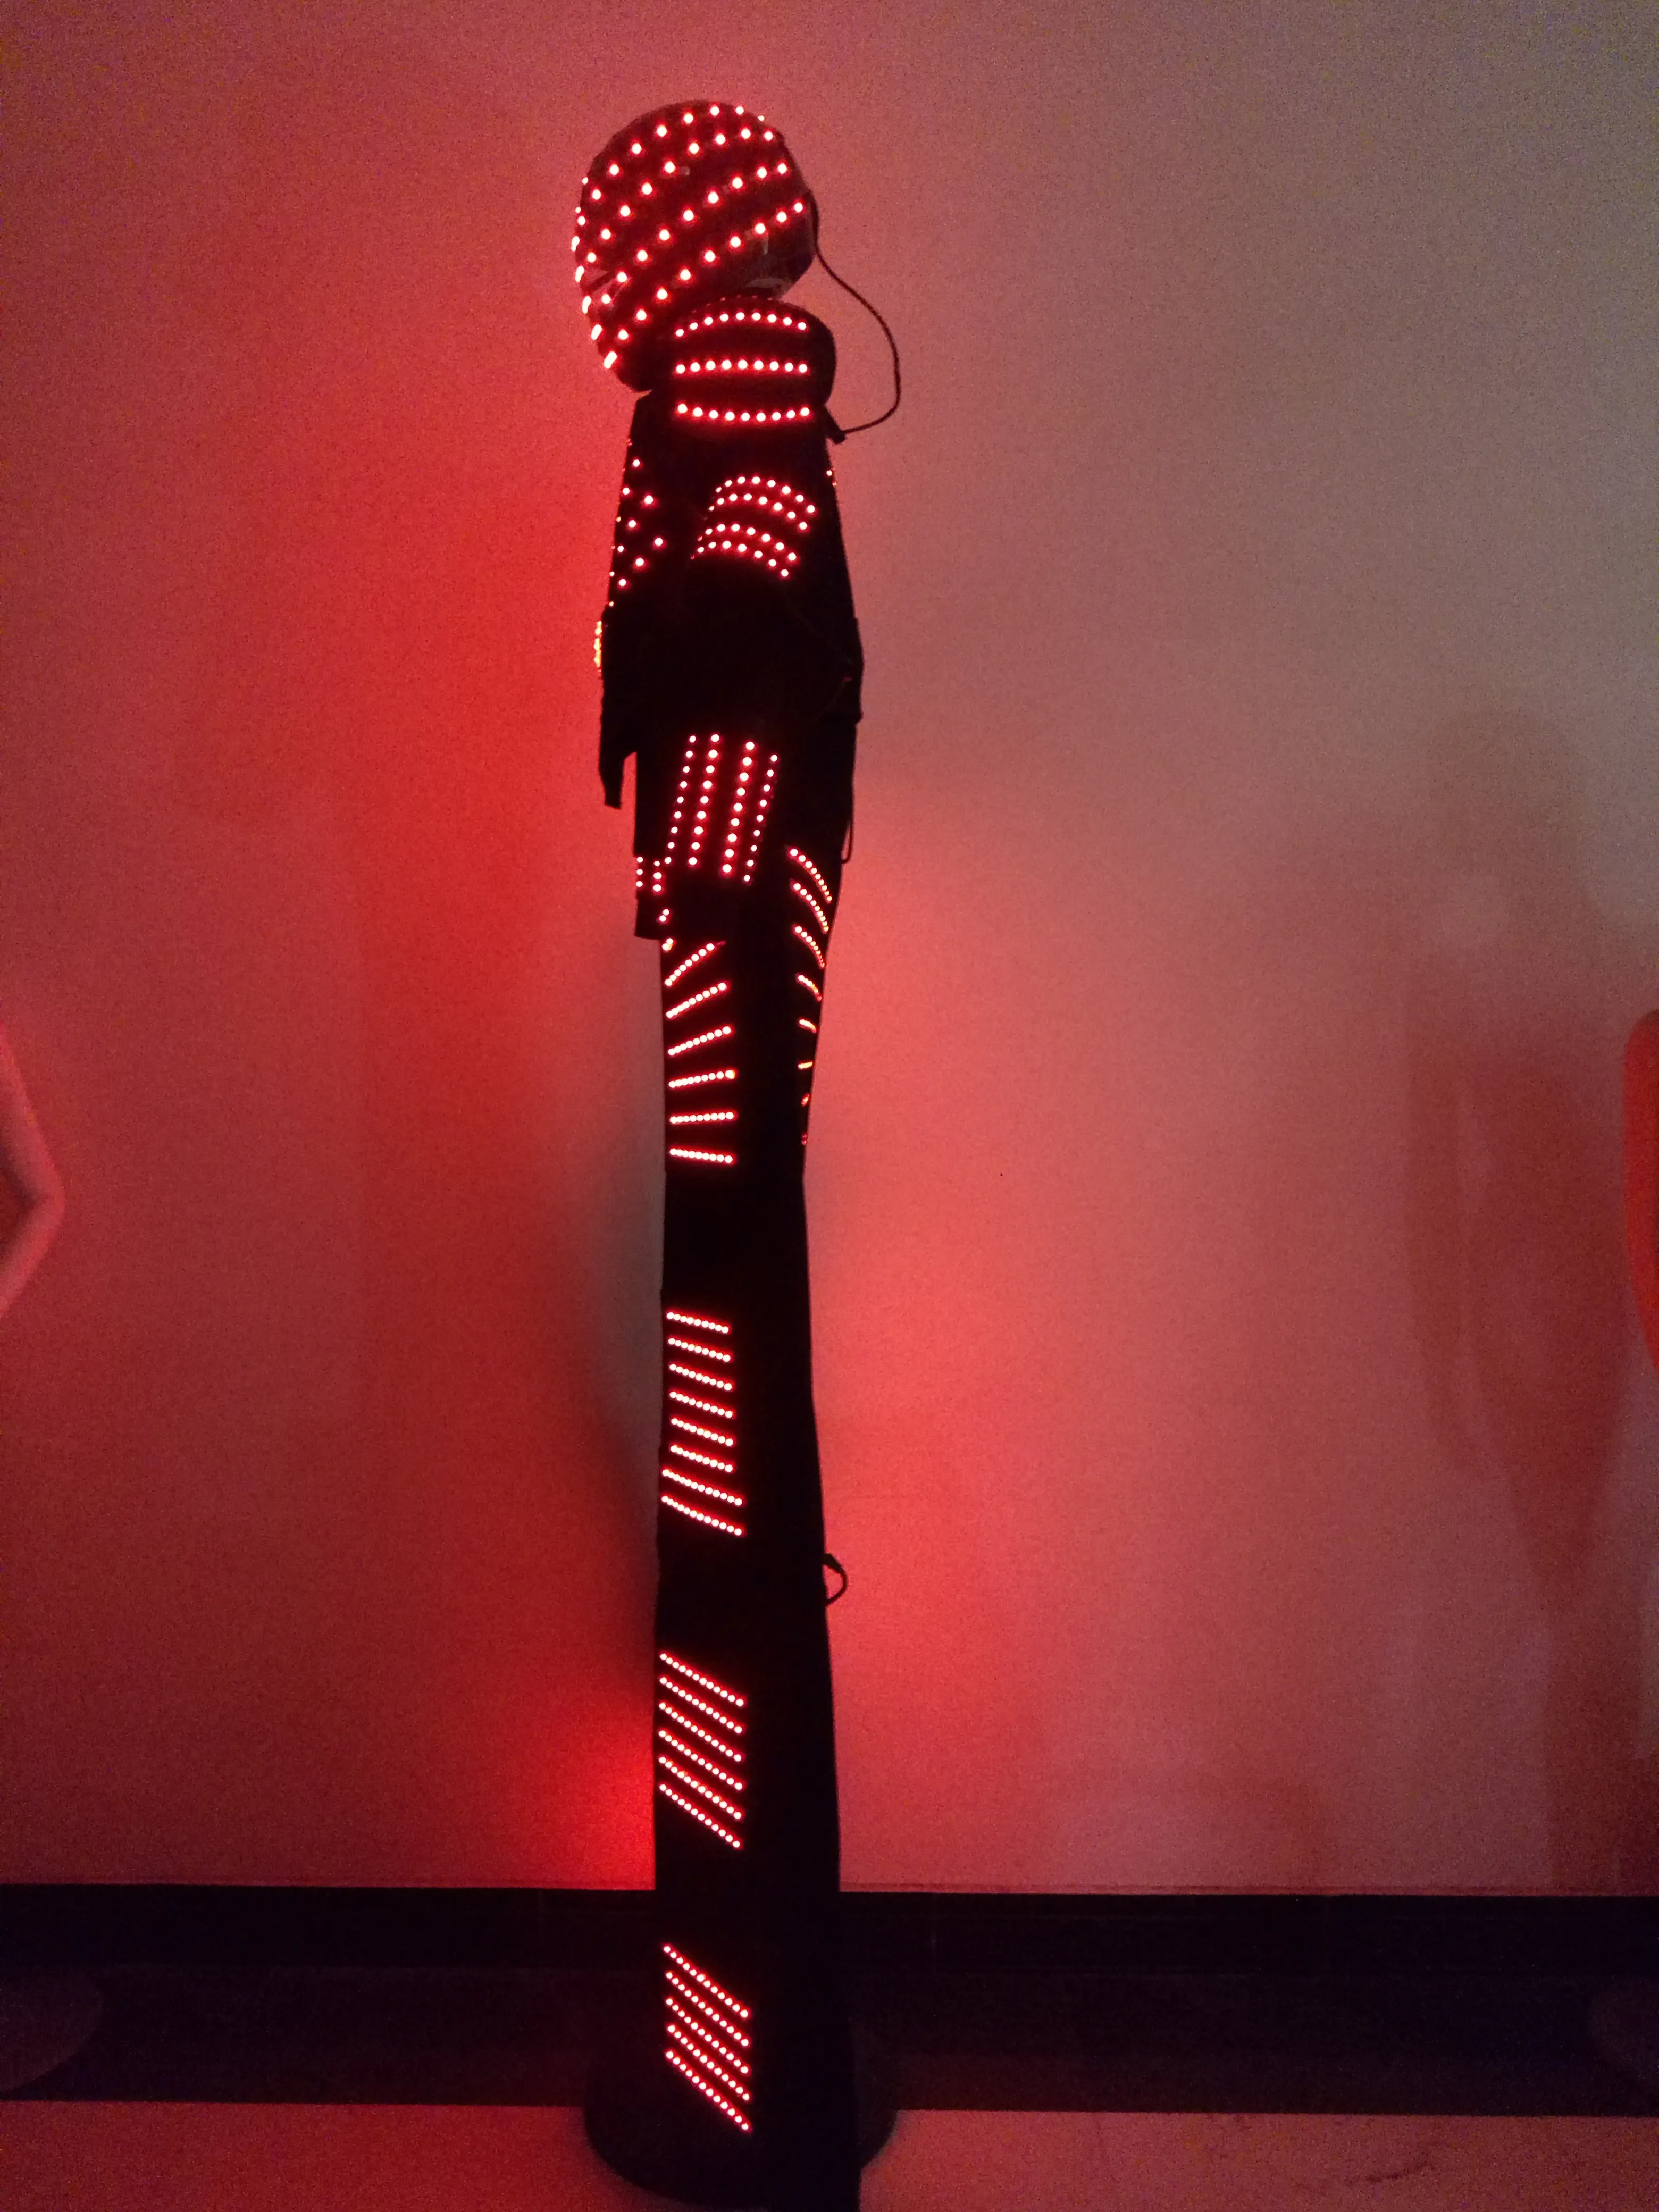 Traje de robô liderado por Doule LED David Guetta Led Robot Suit Robot iluminado Kryoman Robot Tamanho da cor personalizada271W